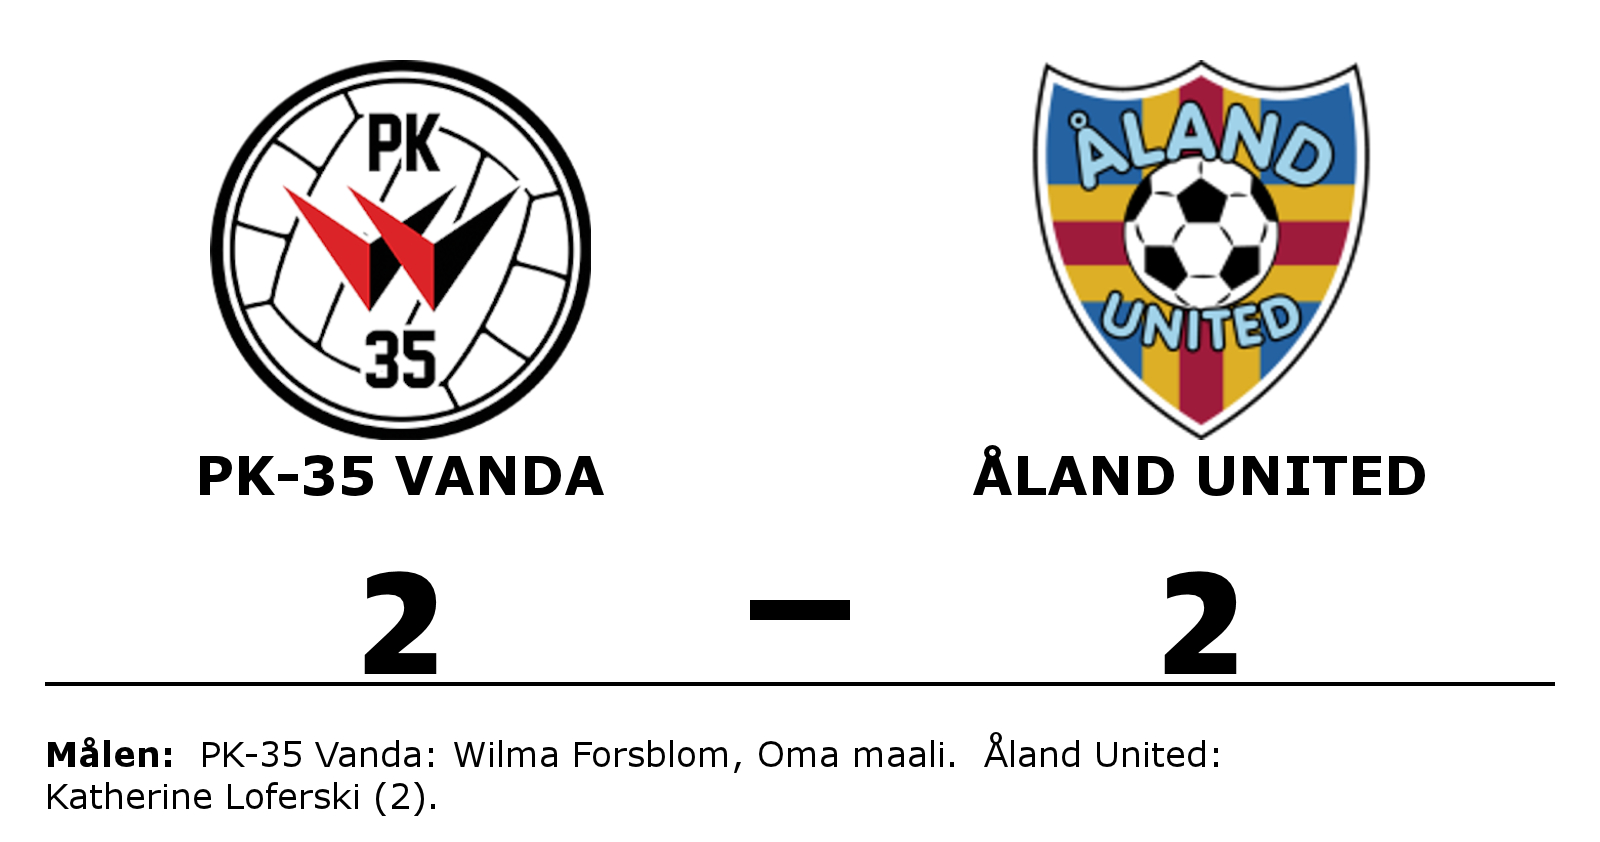 PK-35 Vanda spelade lika mot Åland United